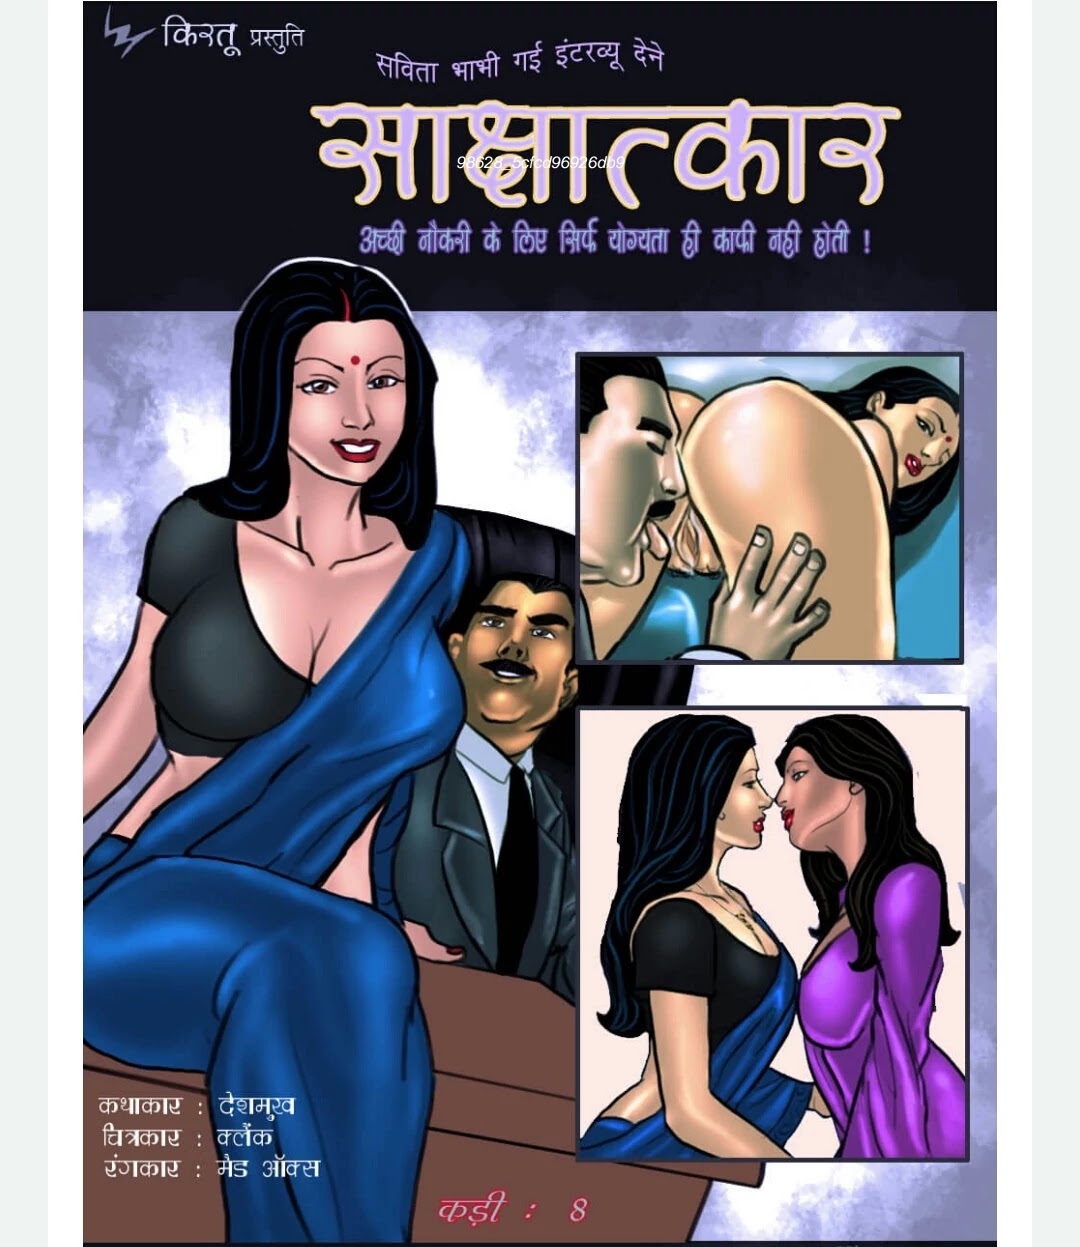 Savita bhabhi free comics episode 8 [Hindi] - Mastram-Kamukta-Antarvasna Sex  Stories